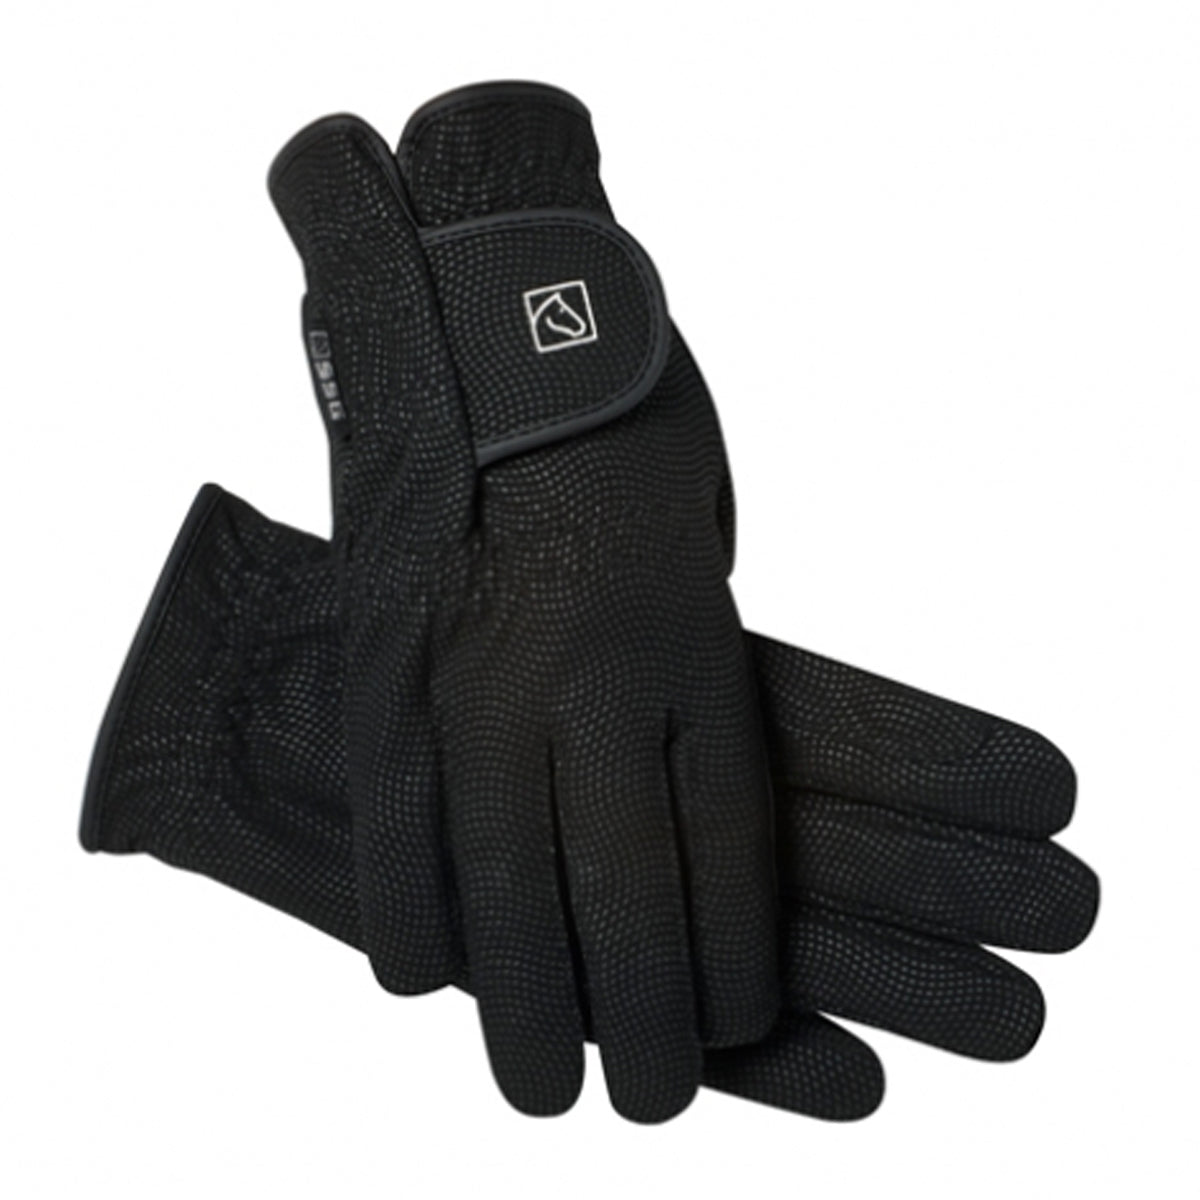 SSG Digital Winter Lined Glove